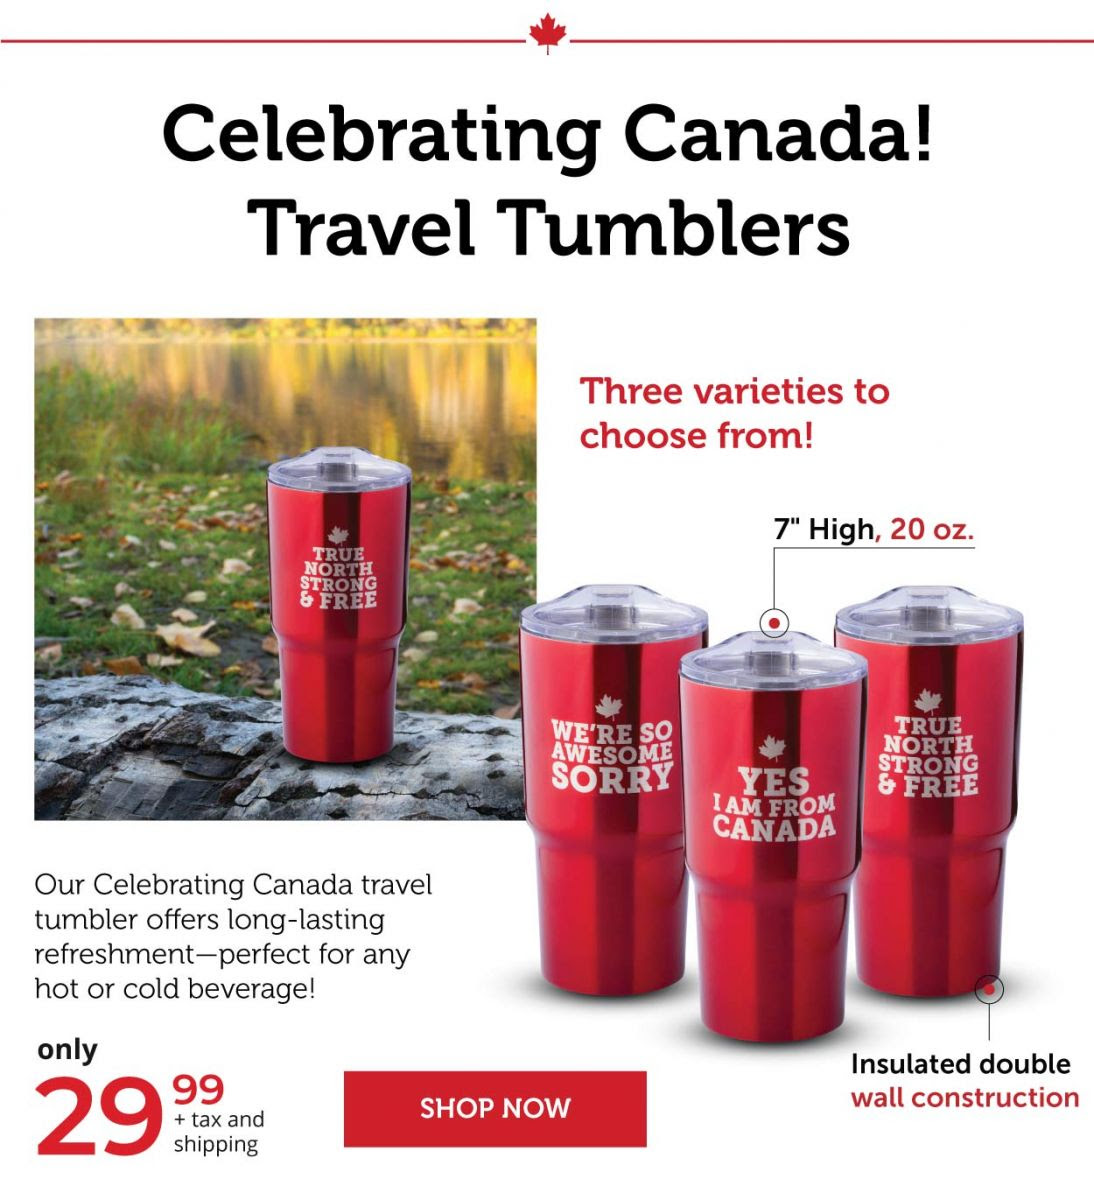 Celebrating Canada Travel Tumblers!